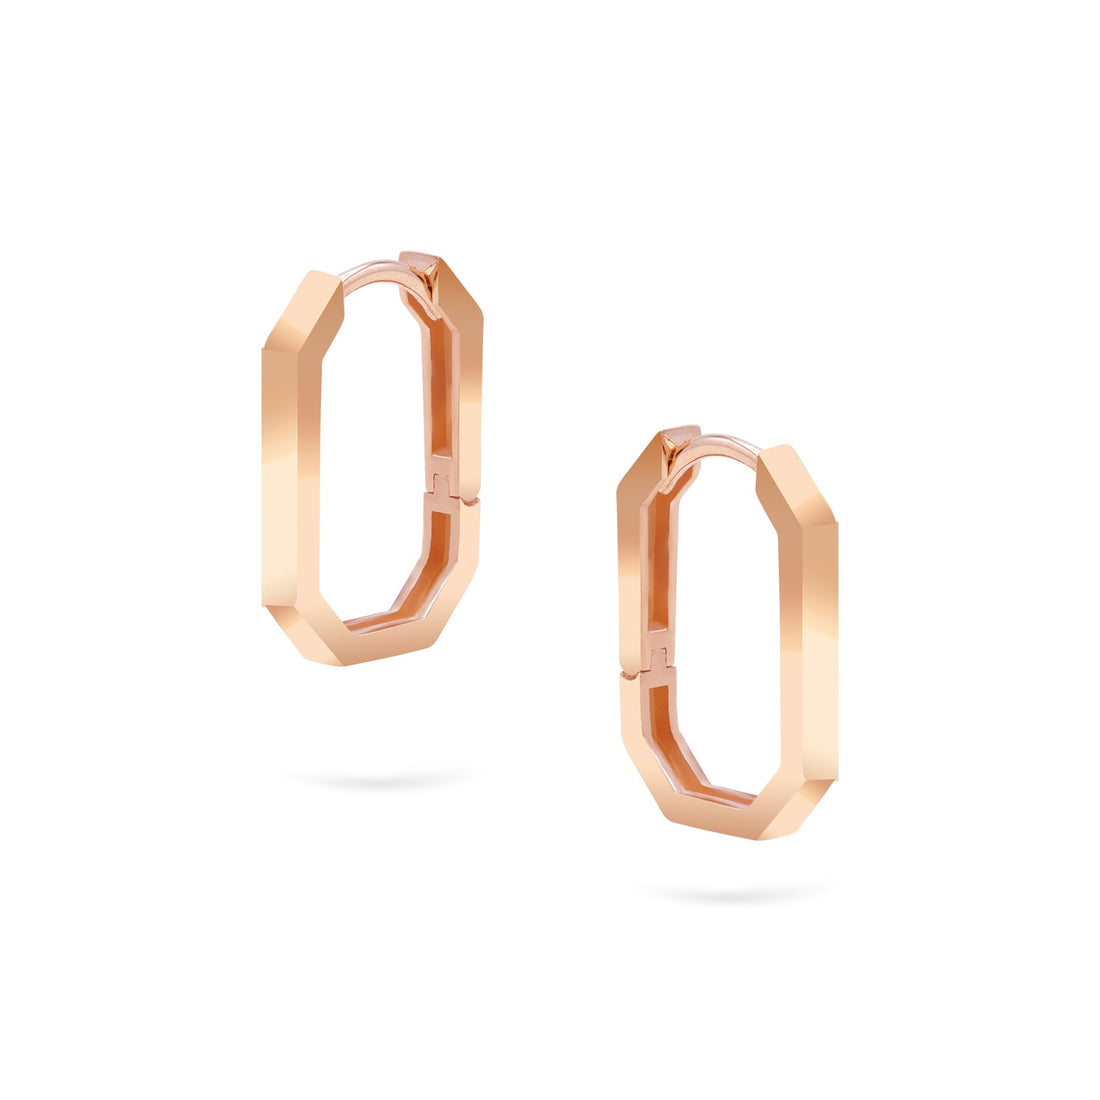 Gilda Jewelry Bold Goldens Hoops | Gold Earrings | 14K - Rose / Pair - earrings Zengoda Shop online from Artisan Brands